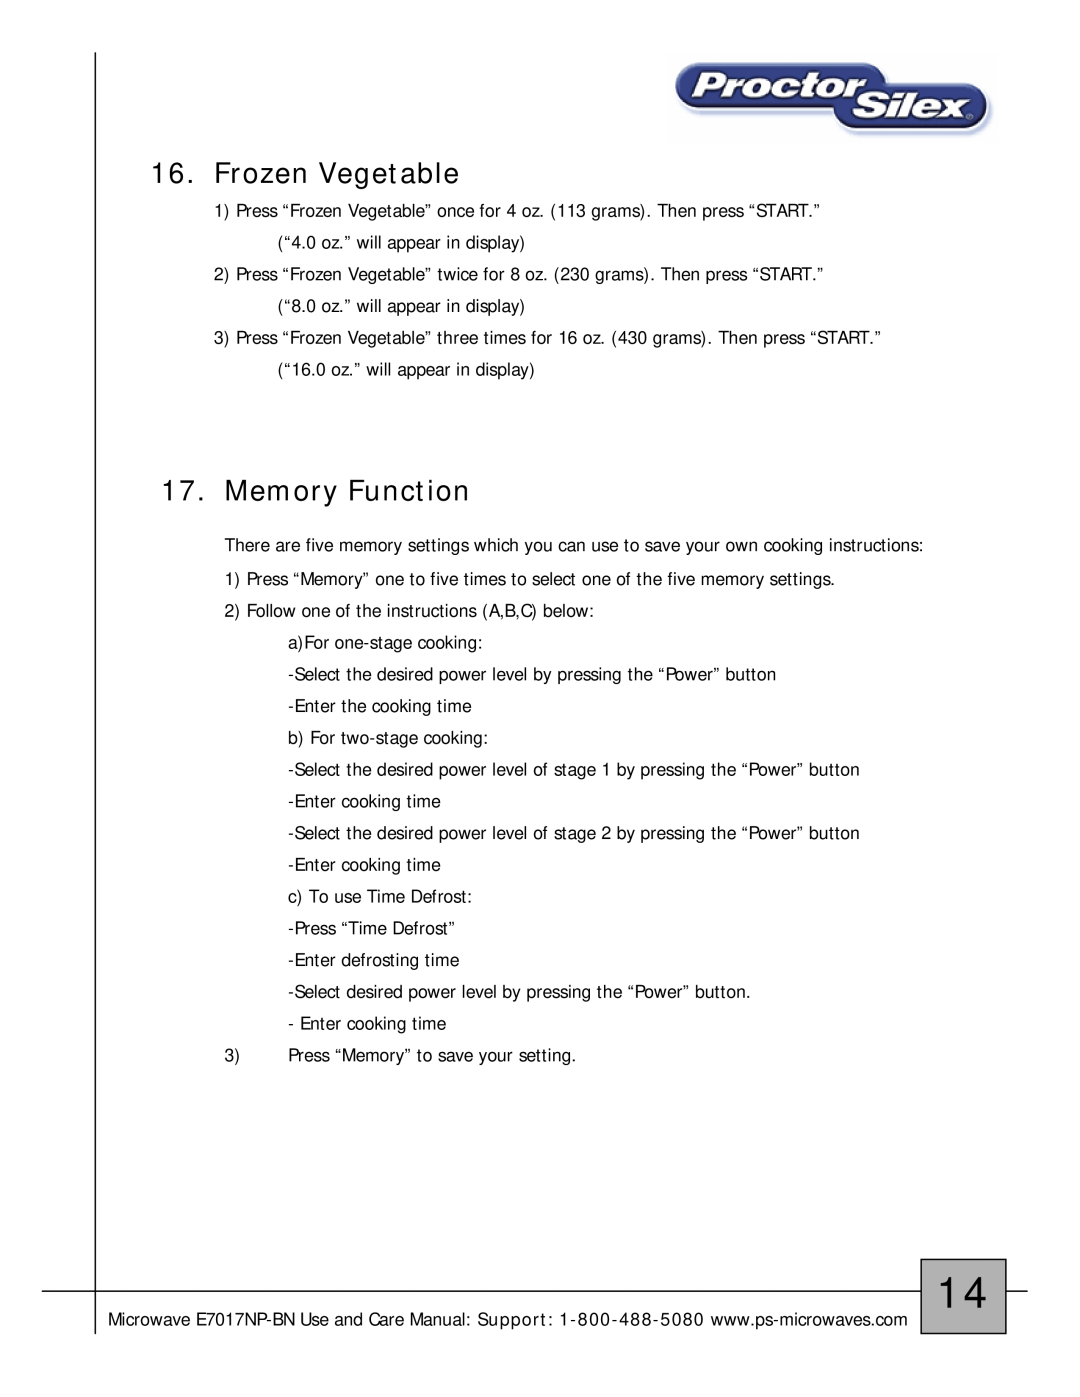 Proctor-Silex E7017NP-BN owner manual Frozen Vegetable, Memory Function 